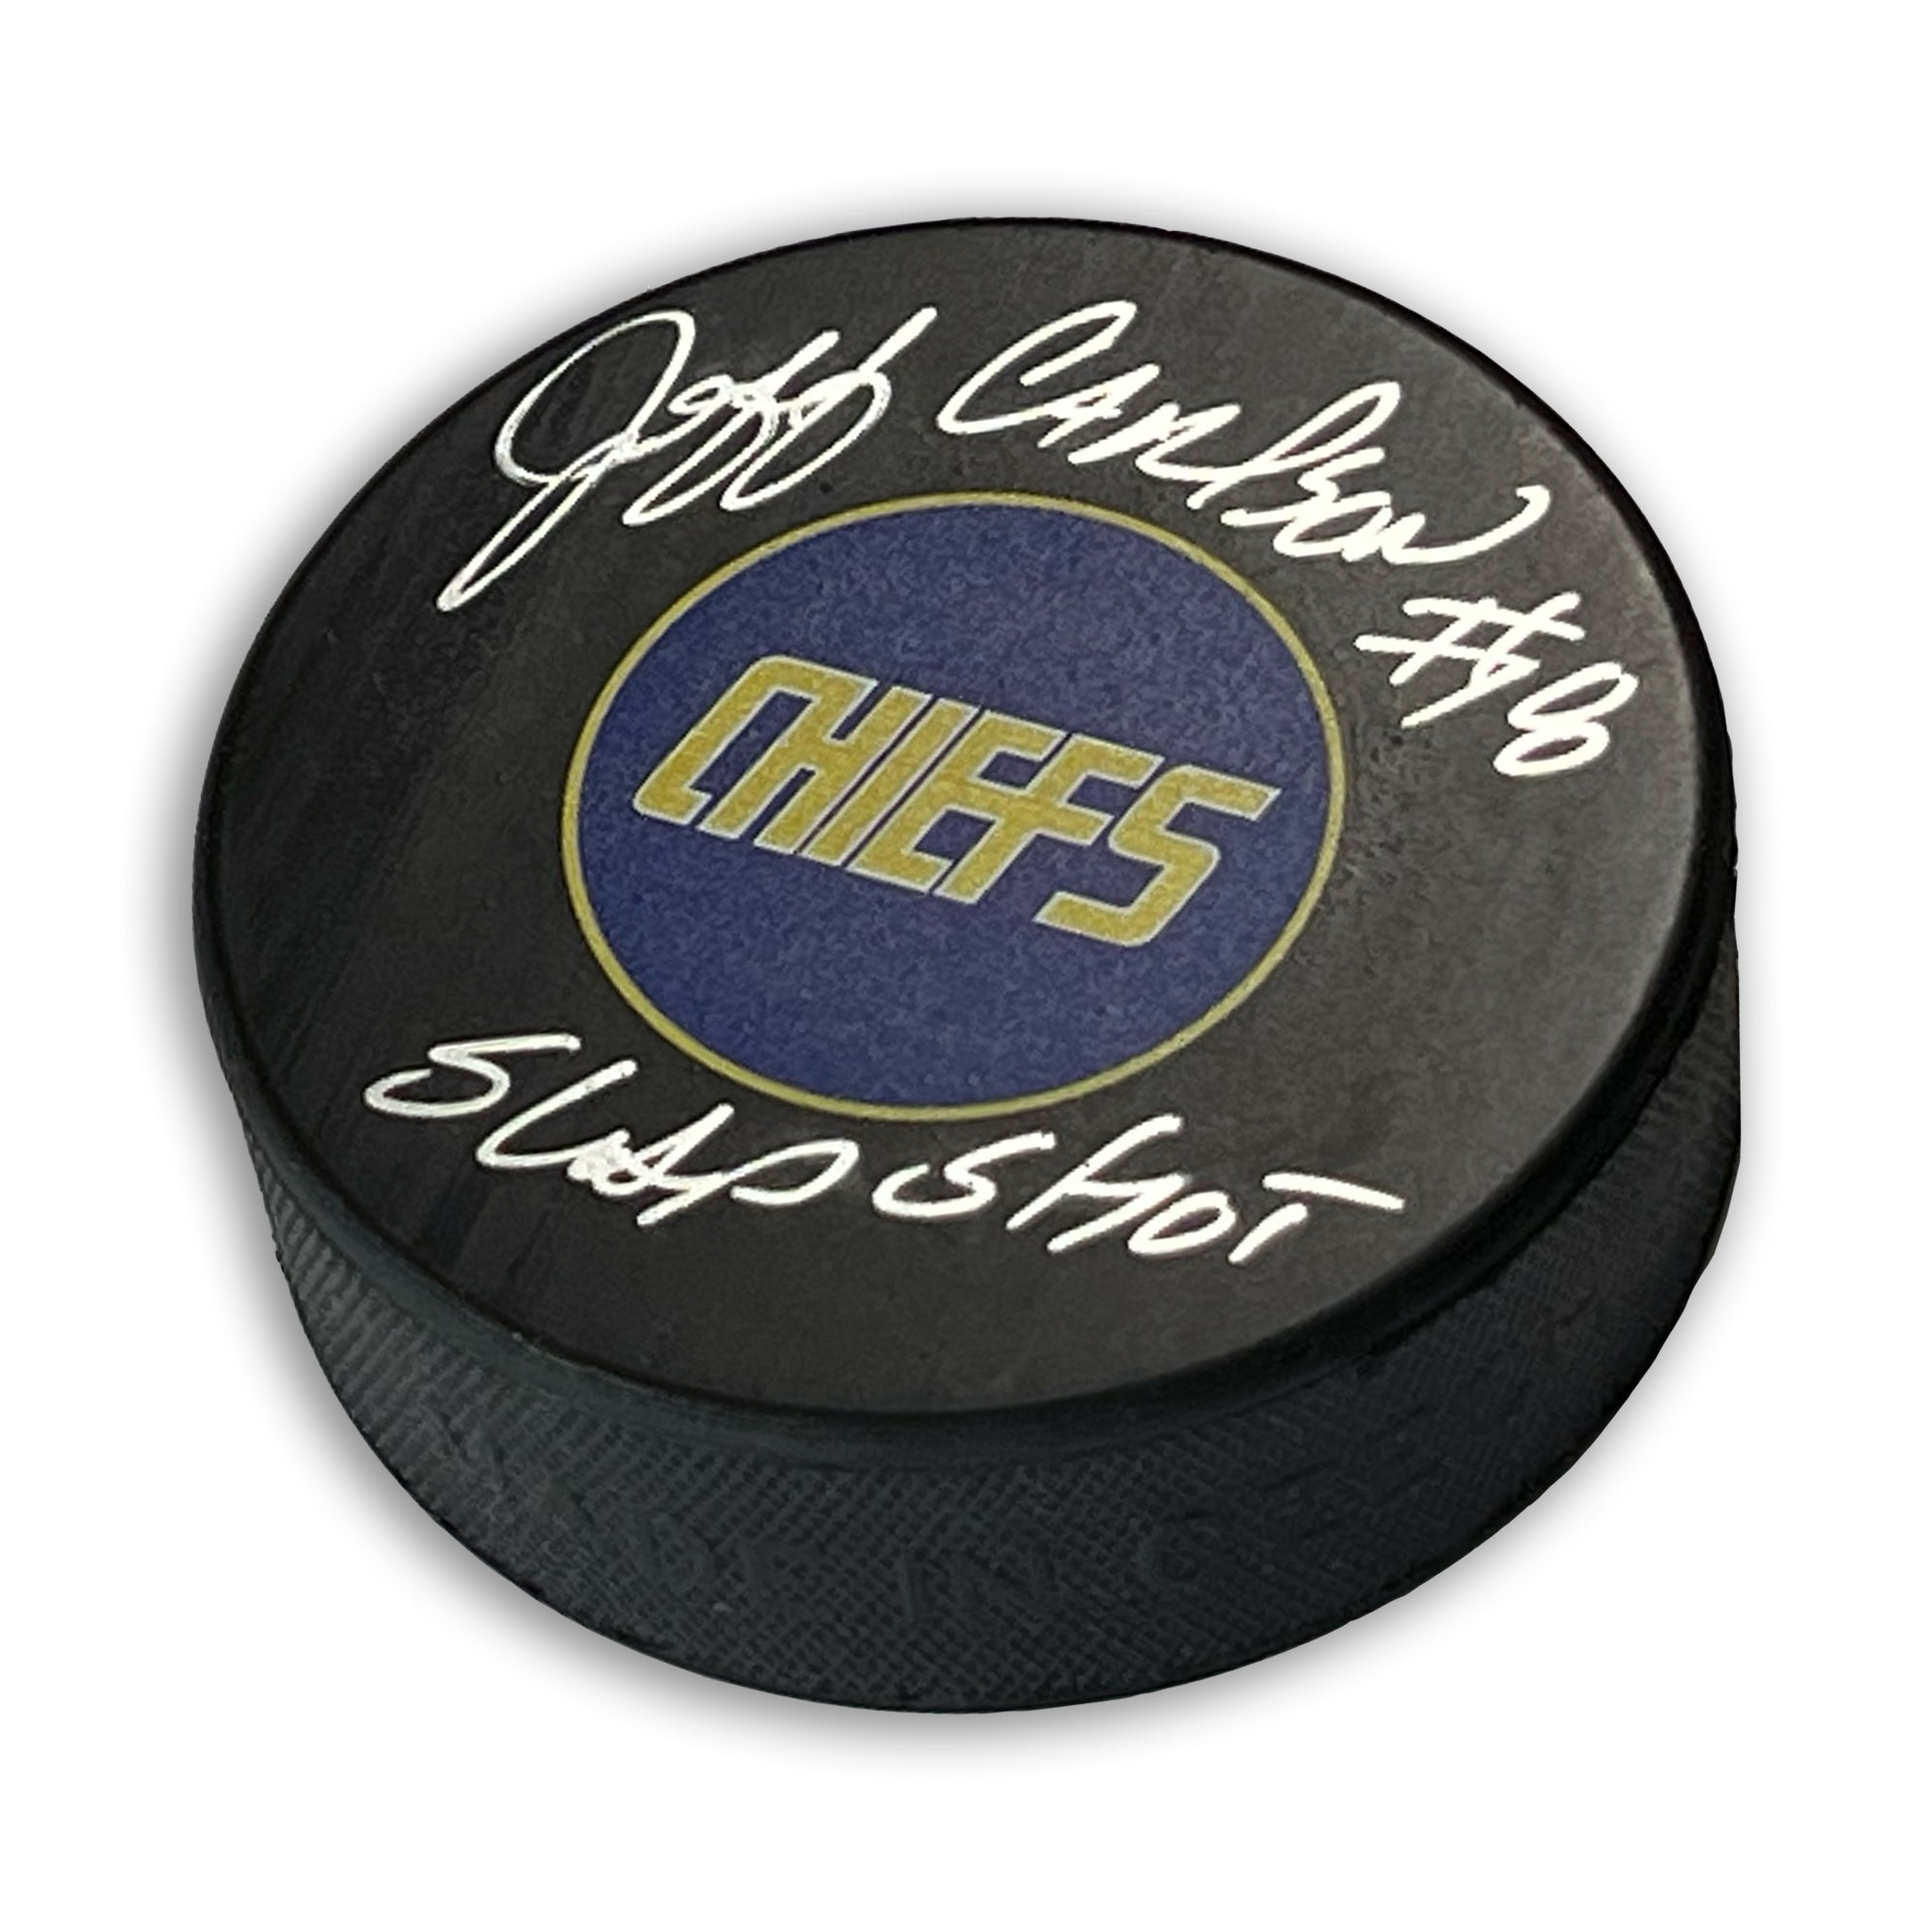 Signed CHIEFS Hockey Puck – Jeff Hanson